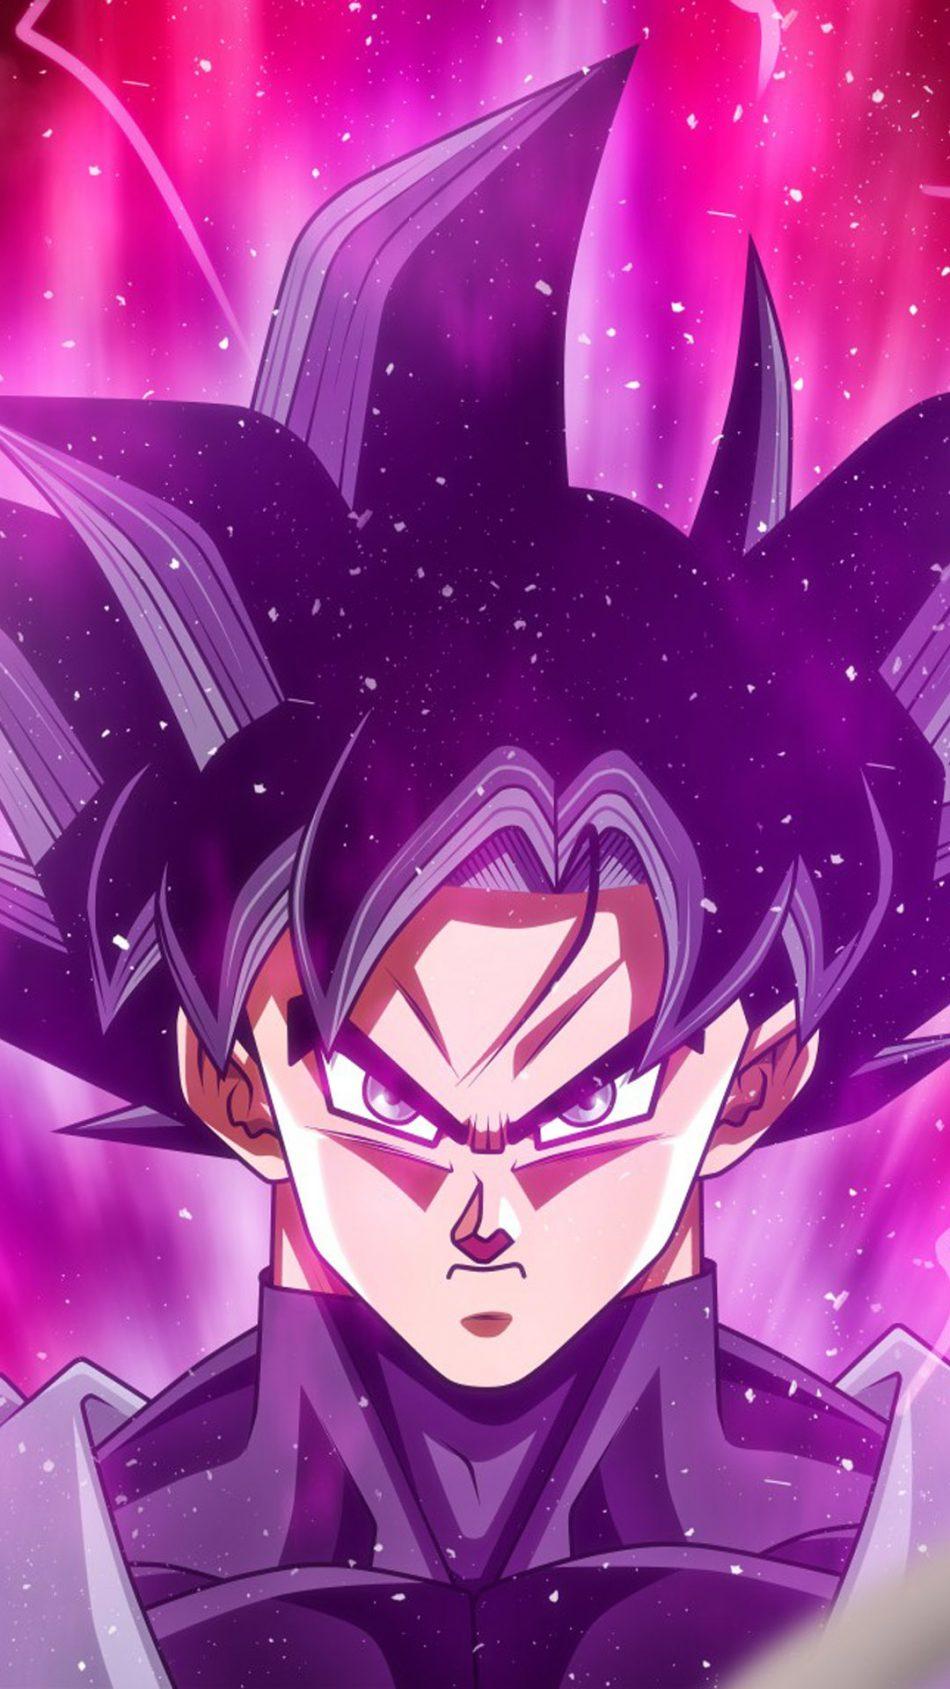 Goku Black Dragon Ball Super Free 4K Ultra HD Mobile Wallpaper